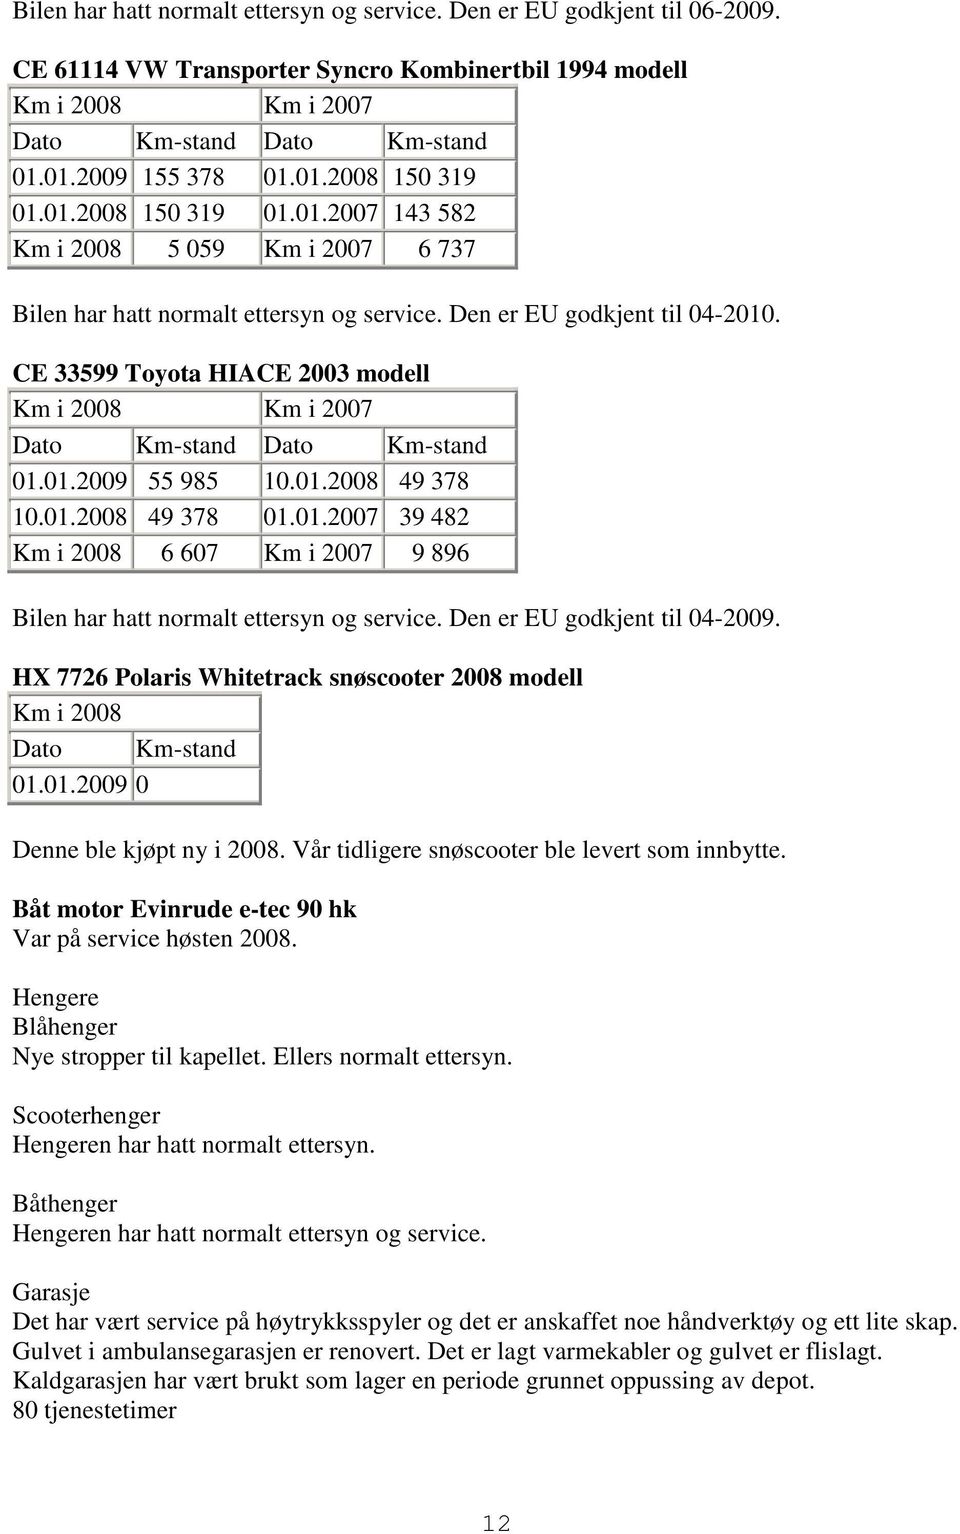 CE 33599 Toyota HIACE 2003 modell Km i 2008 Km i 2007 Dato Km-stand Dato Km-stand 01.01.2009 55 985 10.01.2008 49 378 10.01.2008 49 378 01.01.2007 39 482 Km i 2008 6 607 Km i 2007 9 896 Bilen har hatt normalt ettersyn og service.